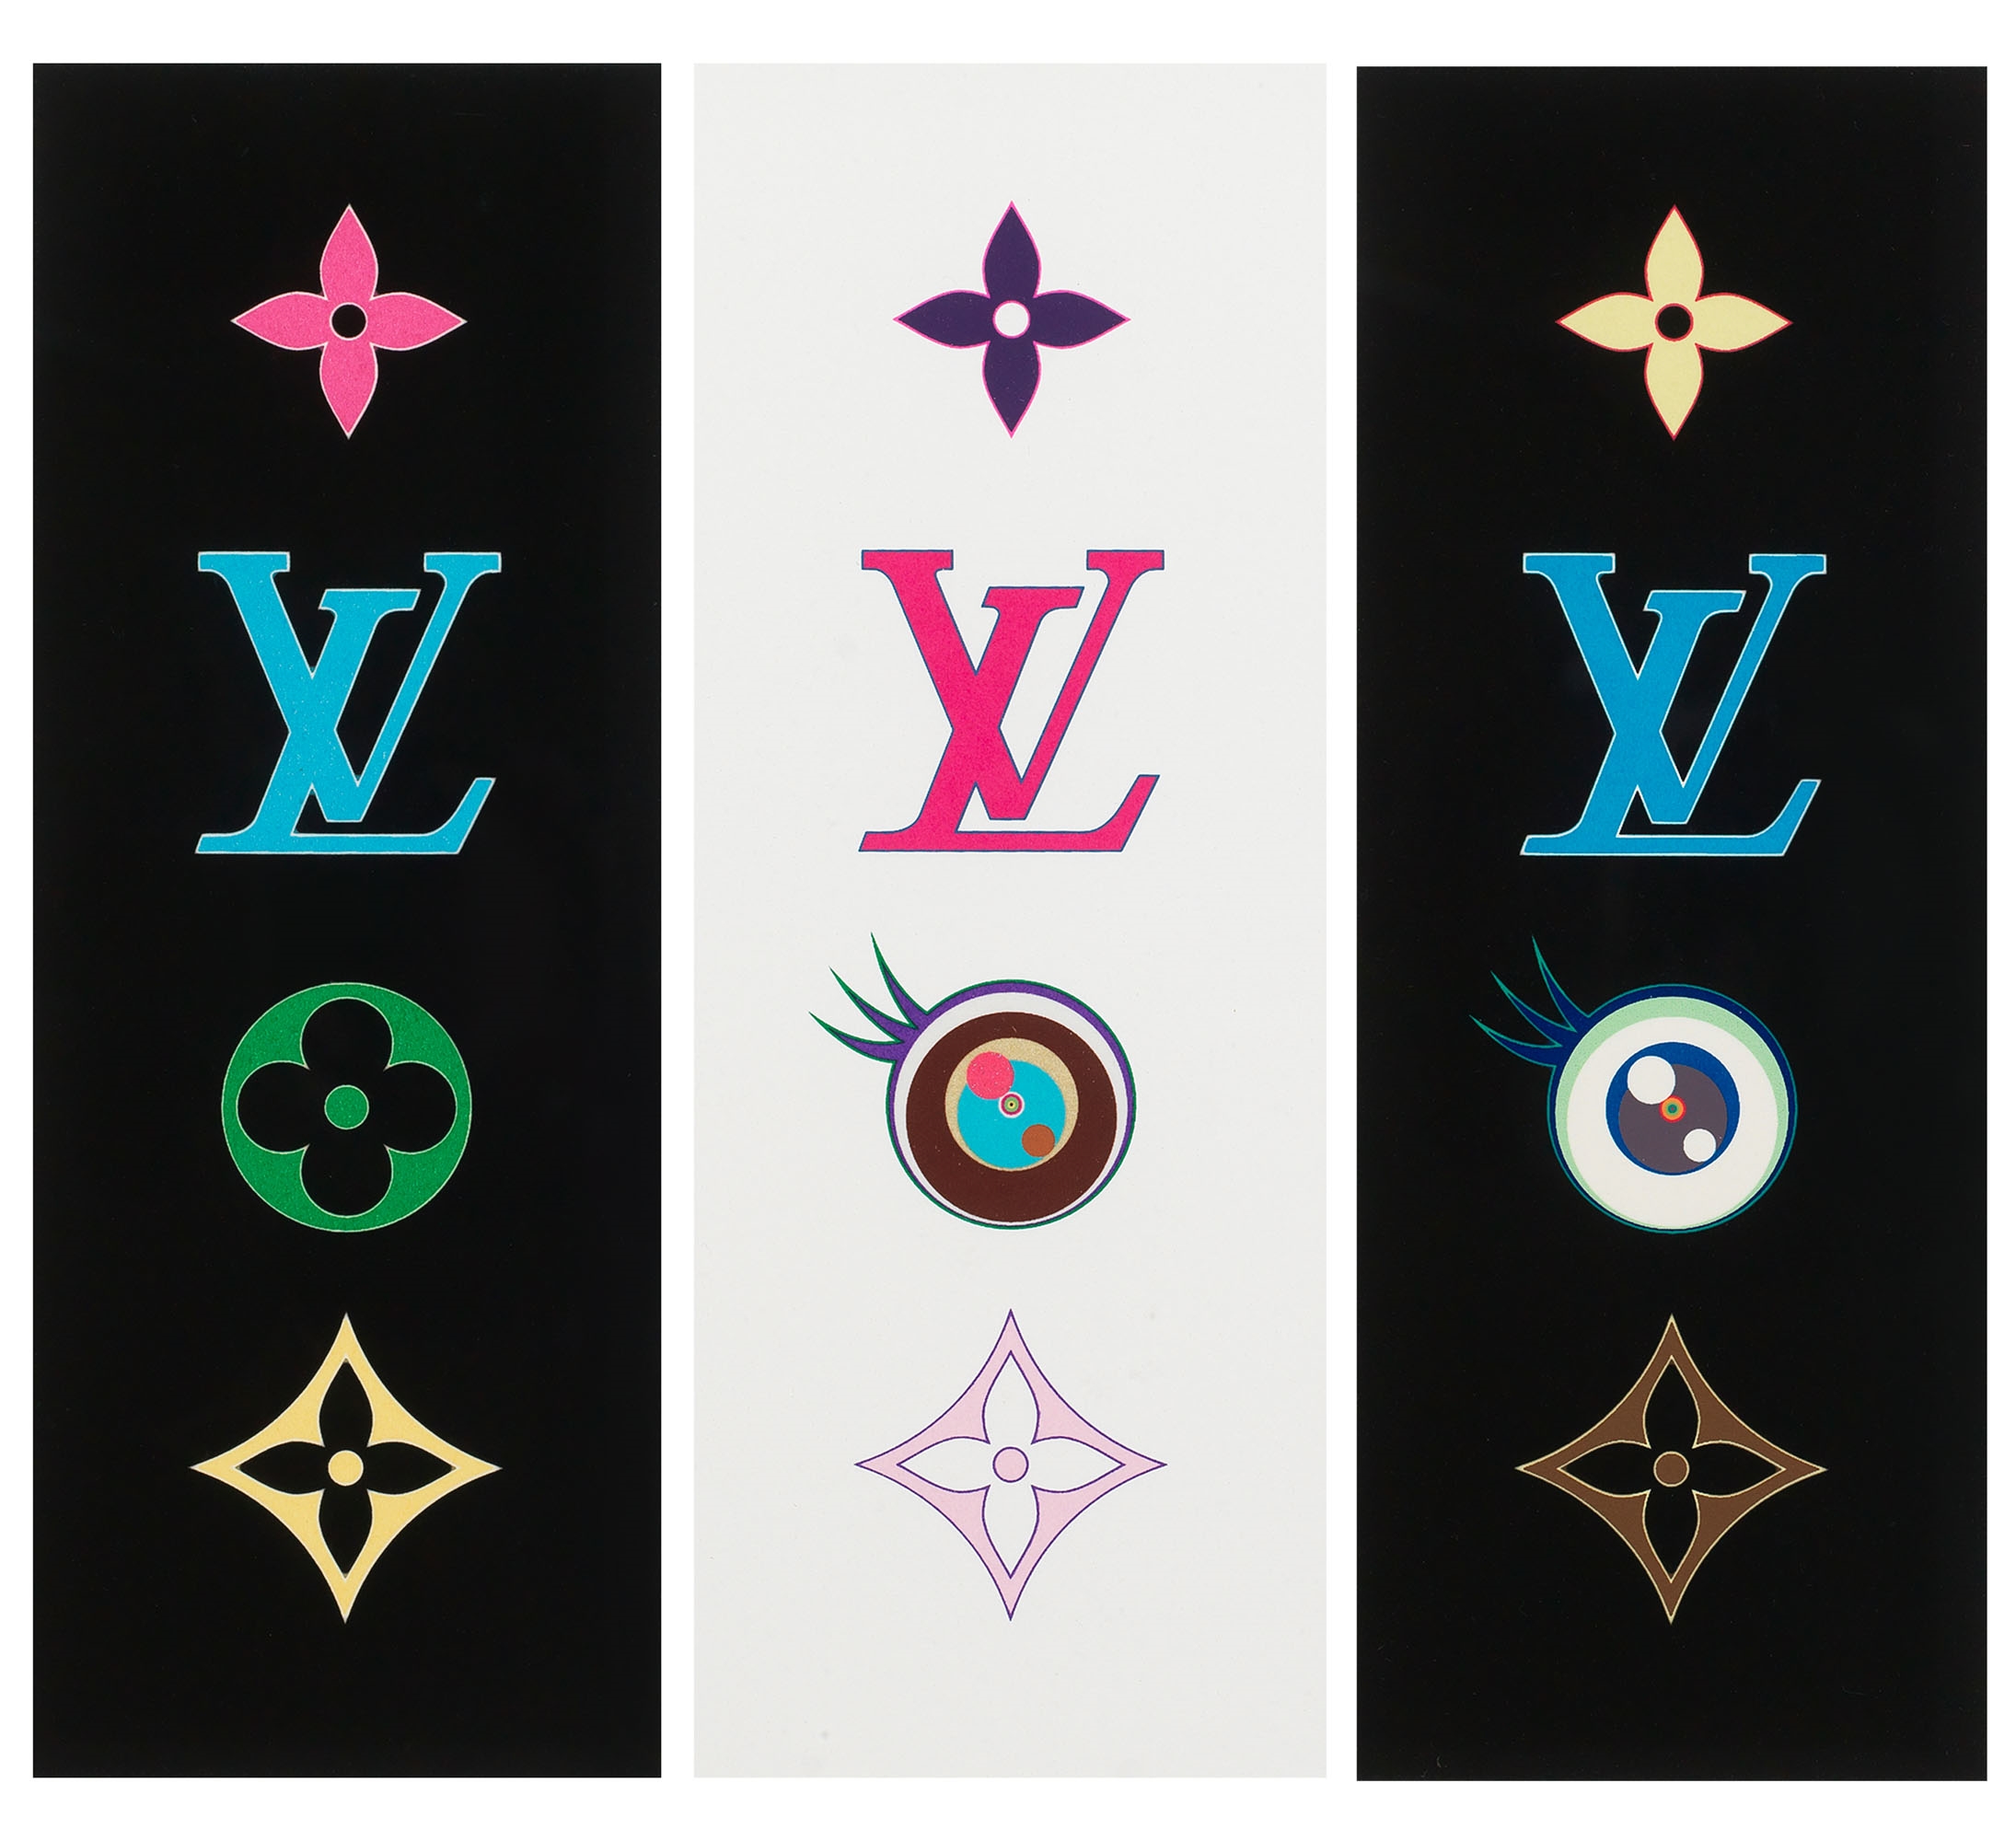 Takashi Murakami, Louis Vuitton, SUPERFLAT Colorful Monogram (White)  (2003), Available for Sale